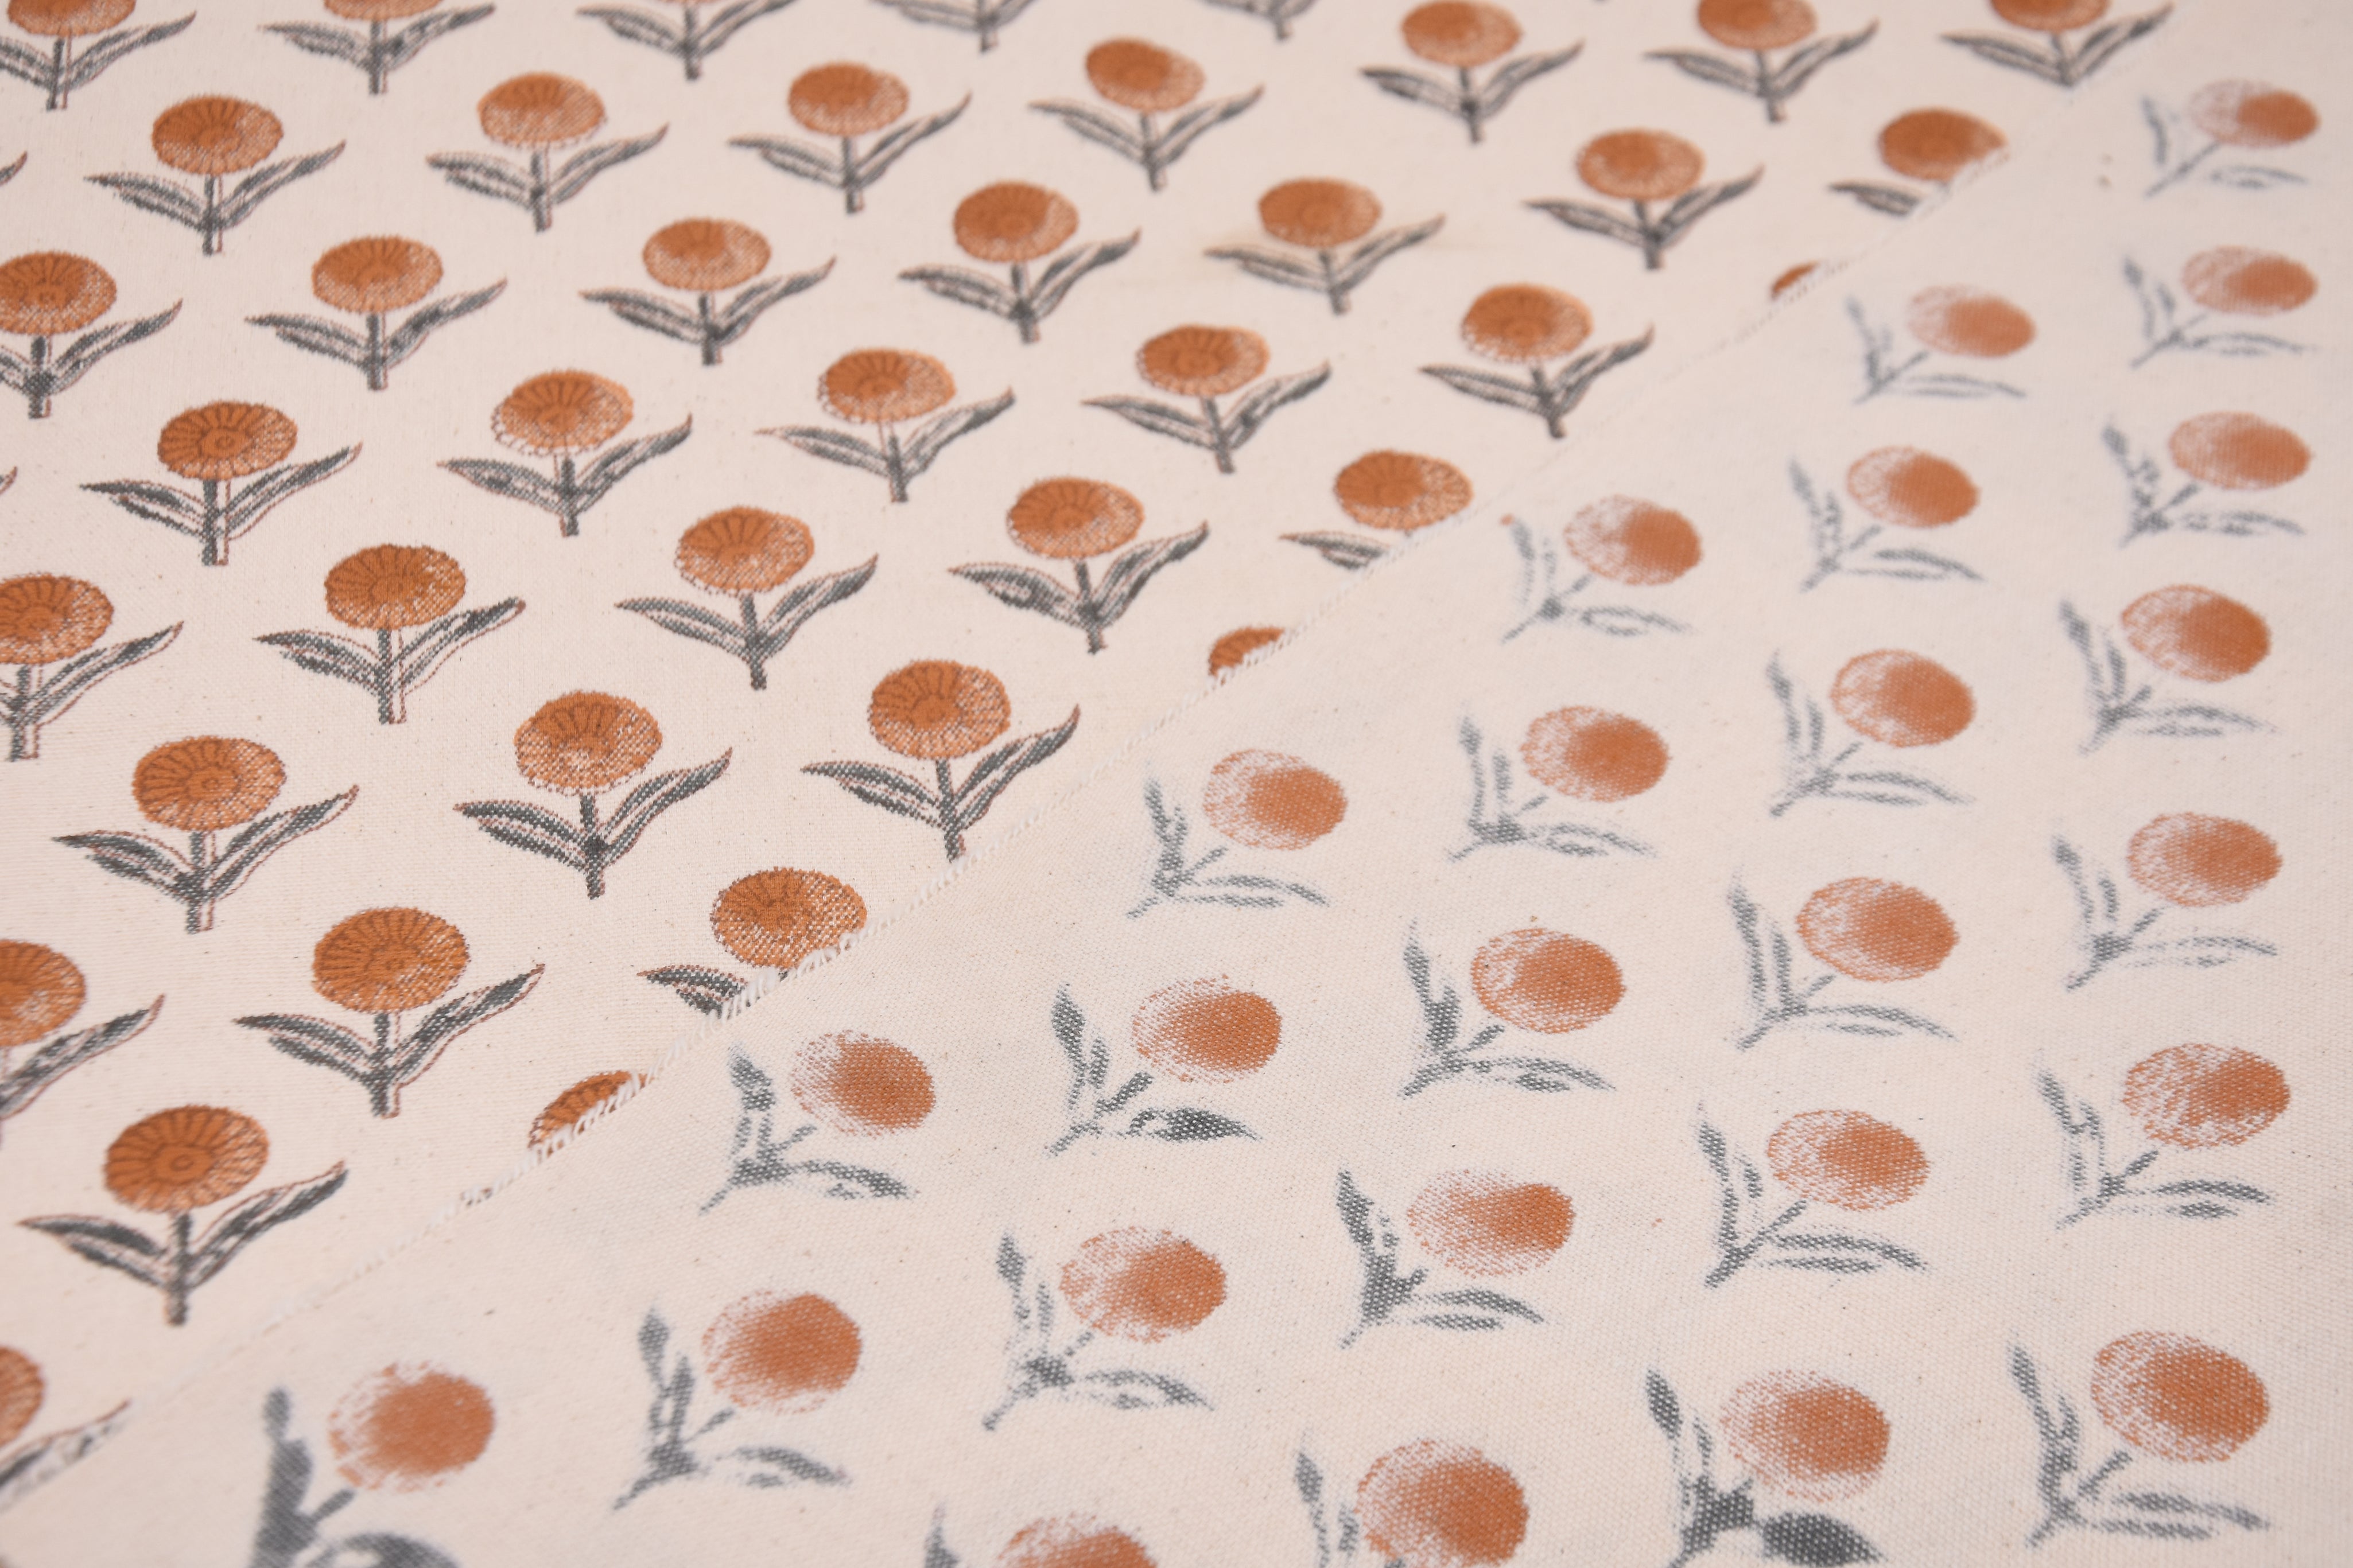 Duck canvas 50" W, floral handmade art, cushion fabric, block print fabric, decorative cushions, linen fabric - PUKHRAJ